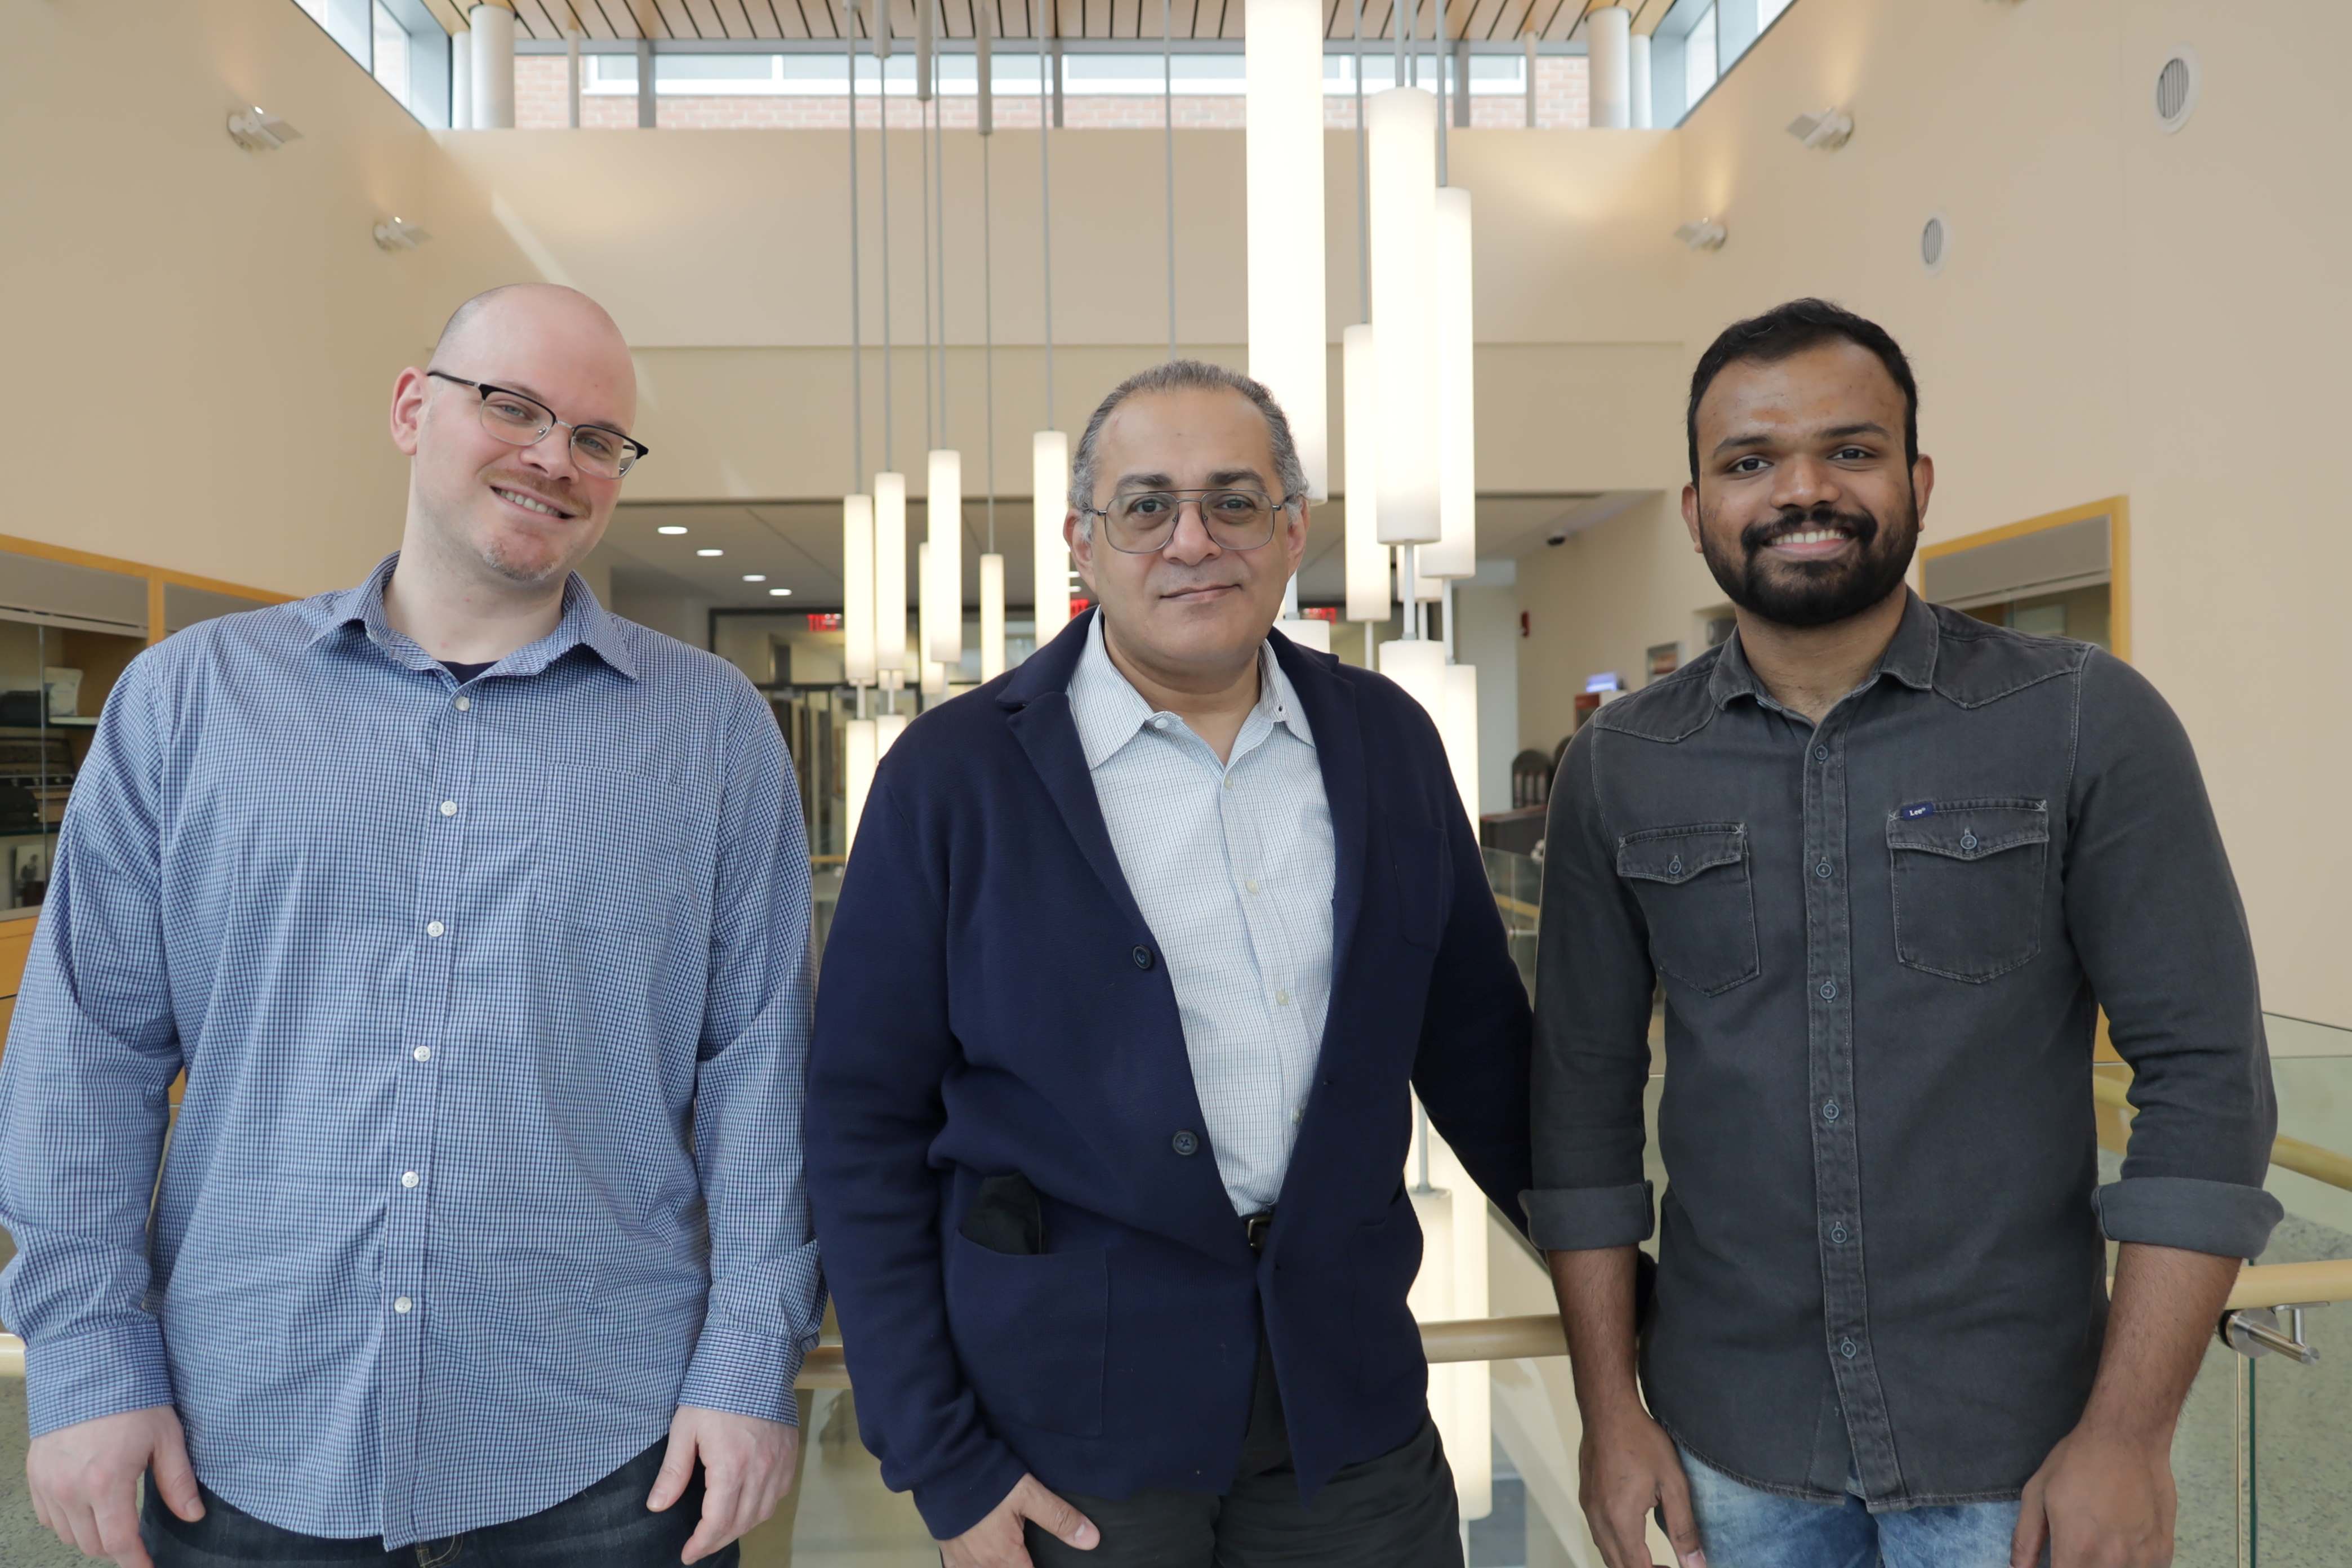  Pictured: L-R Tyler Estro (PhD candidate), Erez Zadok (CS professor), Kamalnath Polakam (MS student)